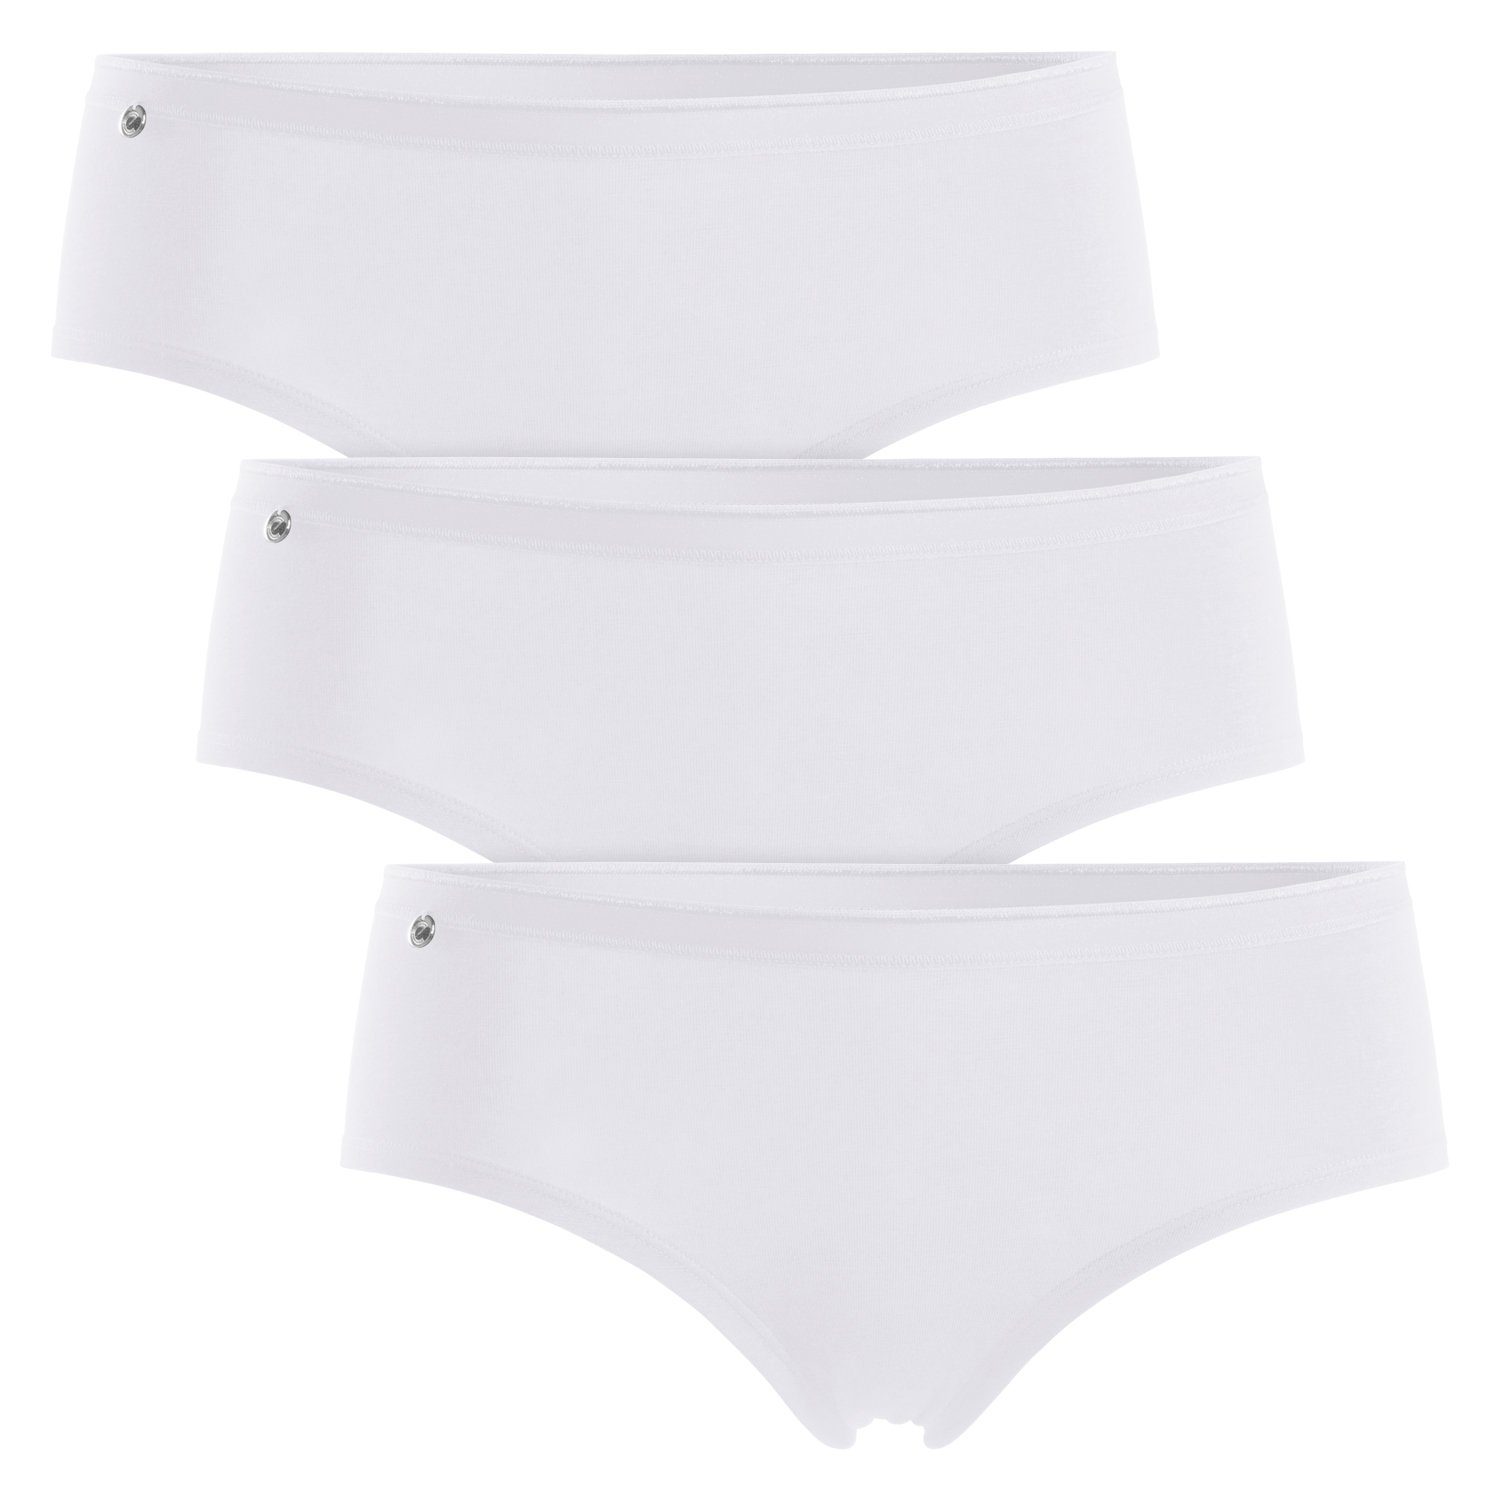 celodoro Panty Damen Basic Panty (3er Pack) Hipster Slip mit Zier-Logo Weiß